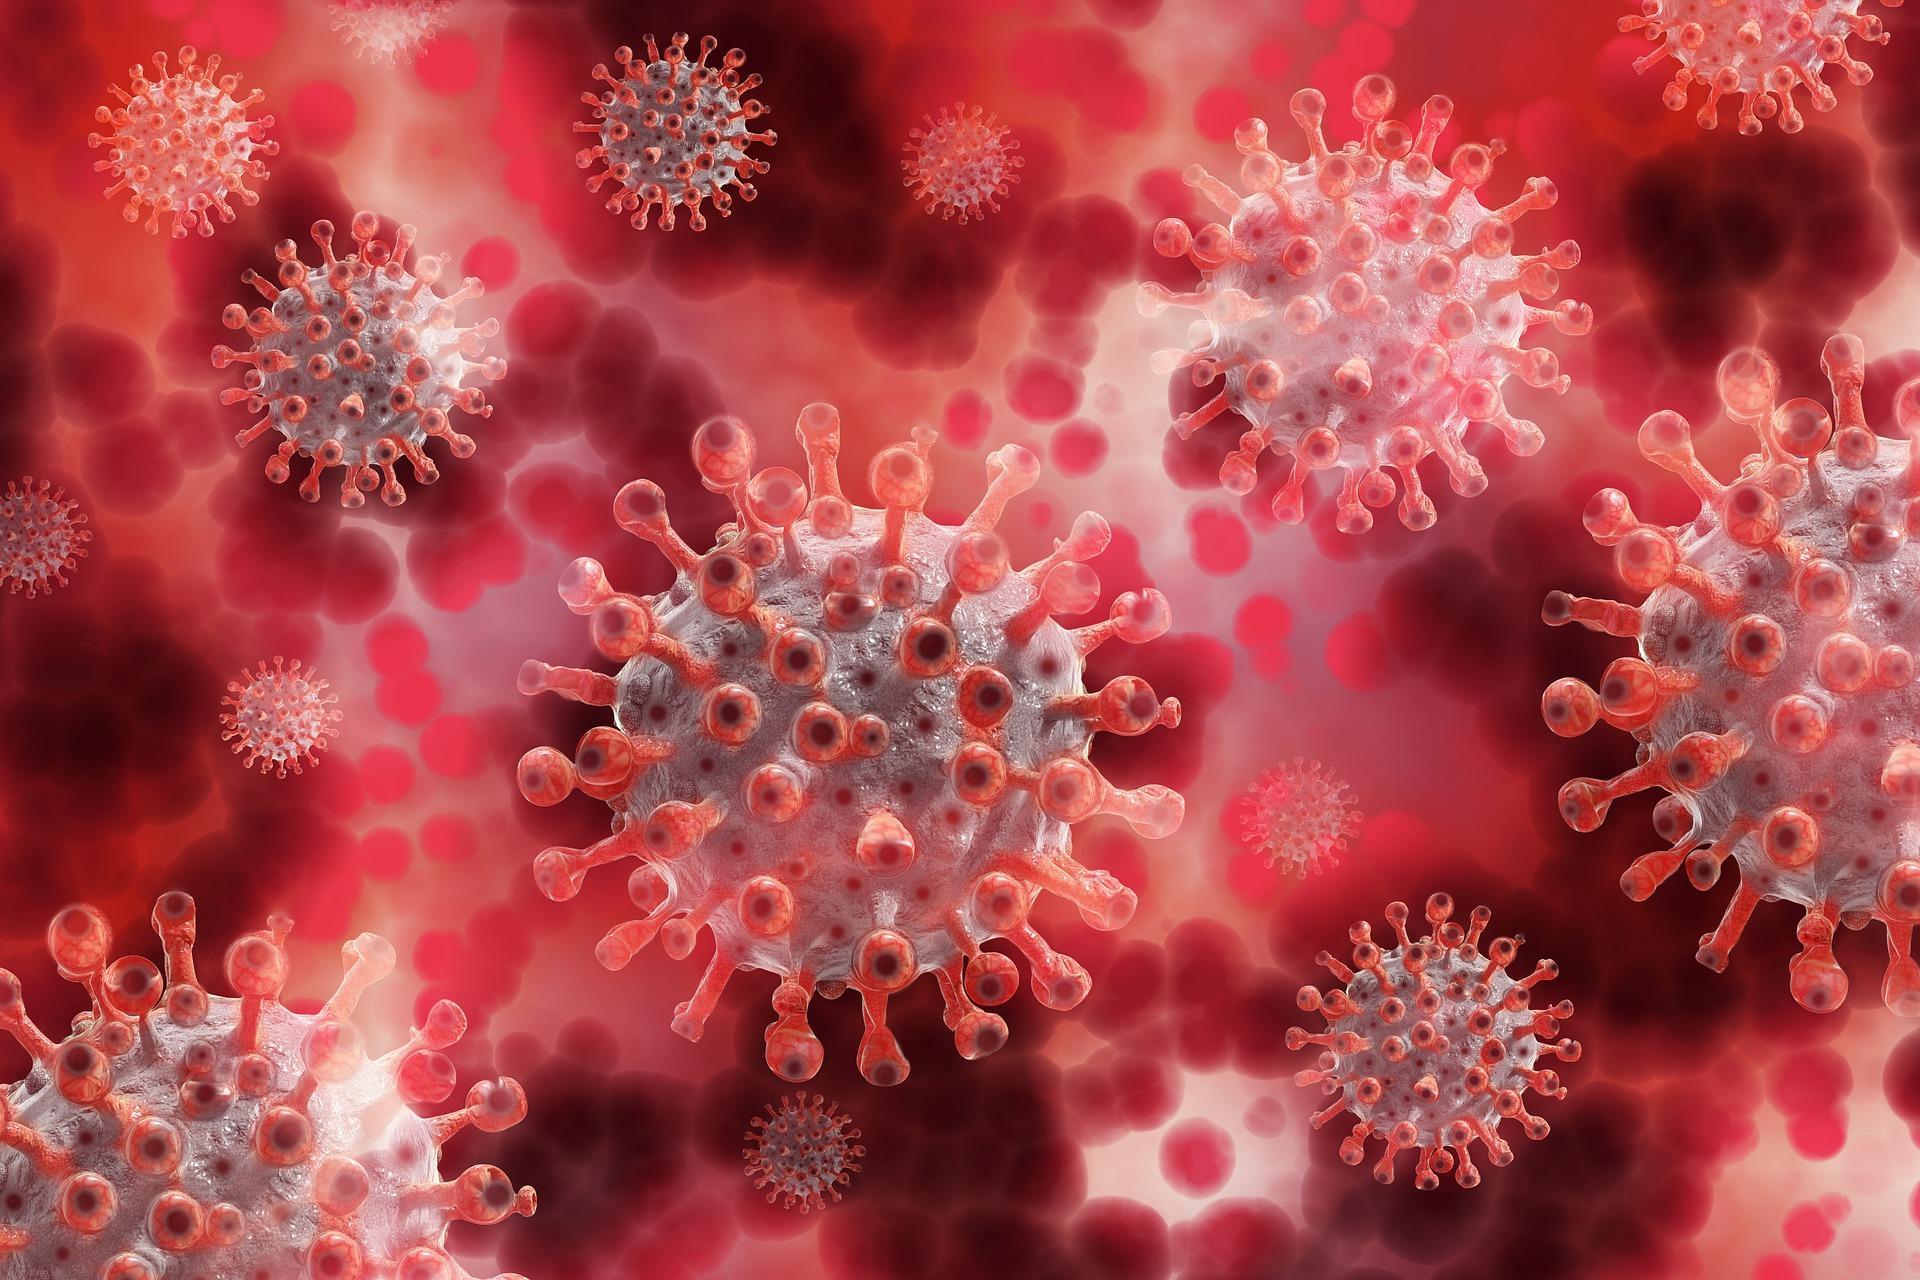 Coronavirus graphic. Image by Gerd Altmann, from Pixabay.